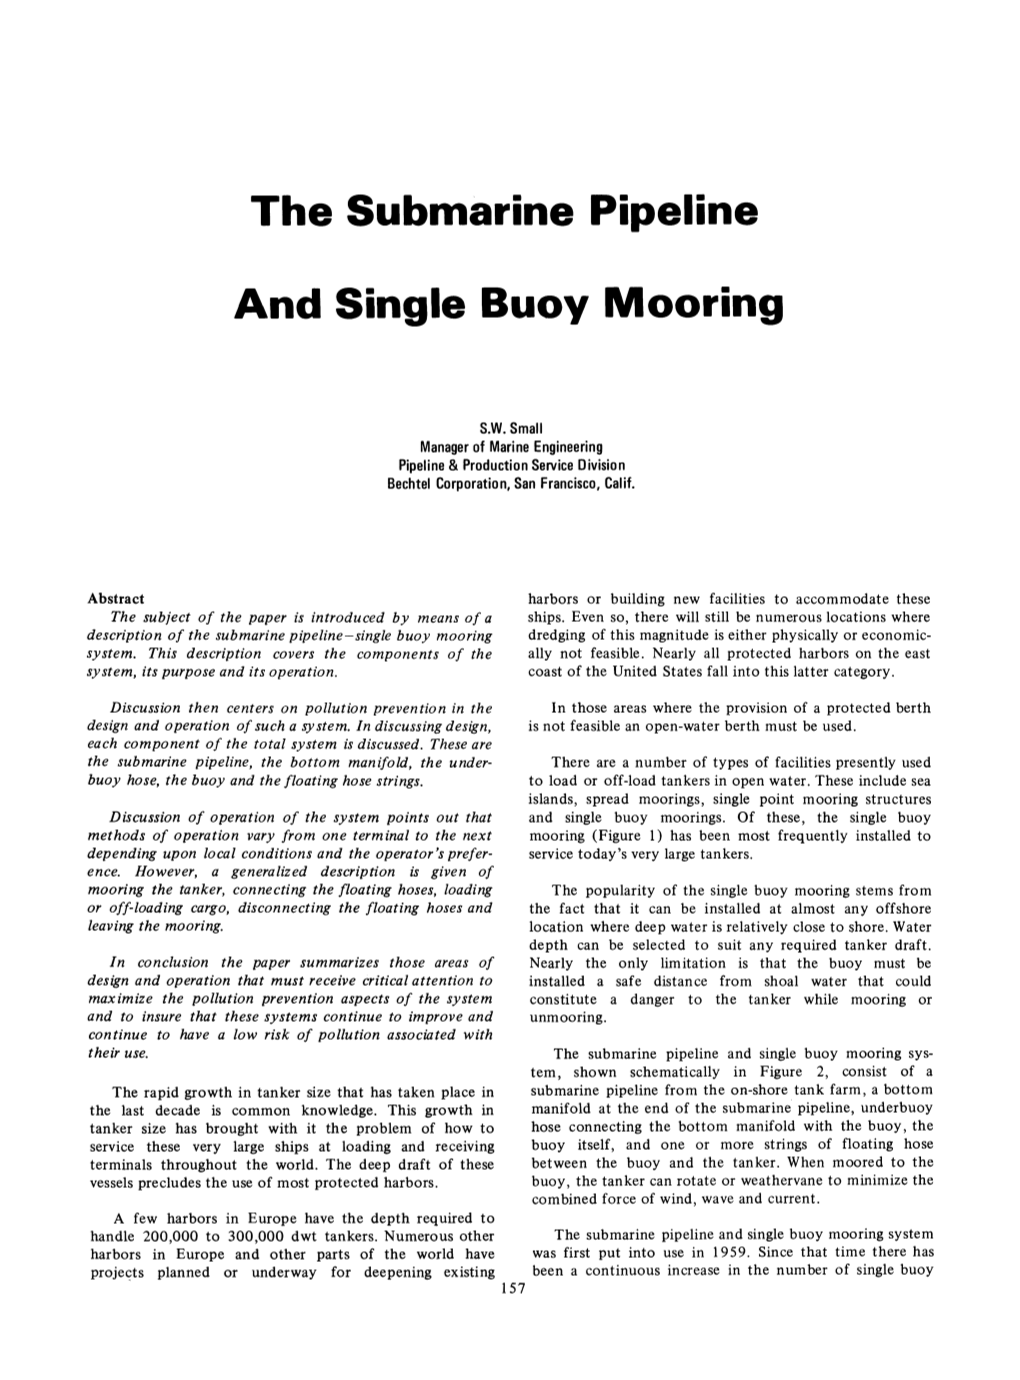 The Submarine Pipeline and Single Buoy Mooring